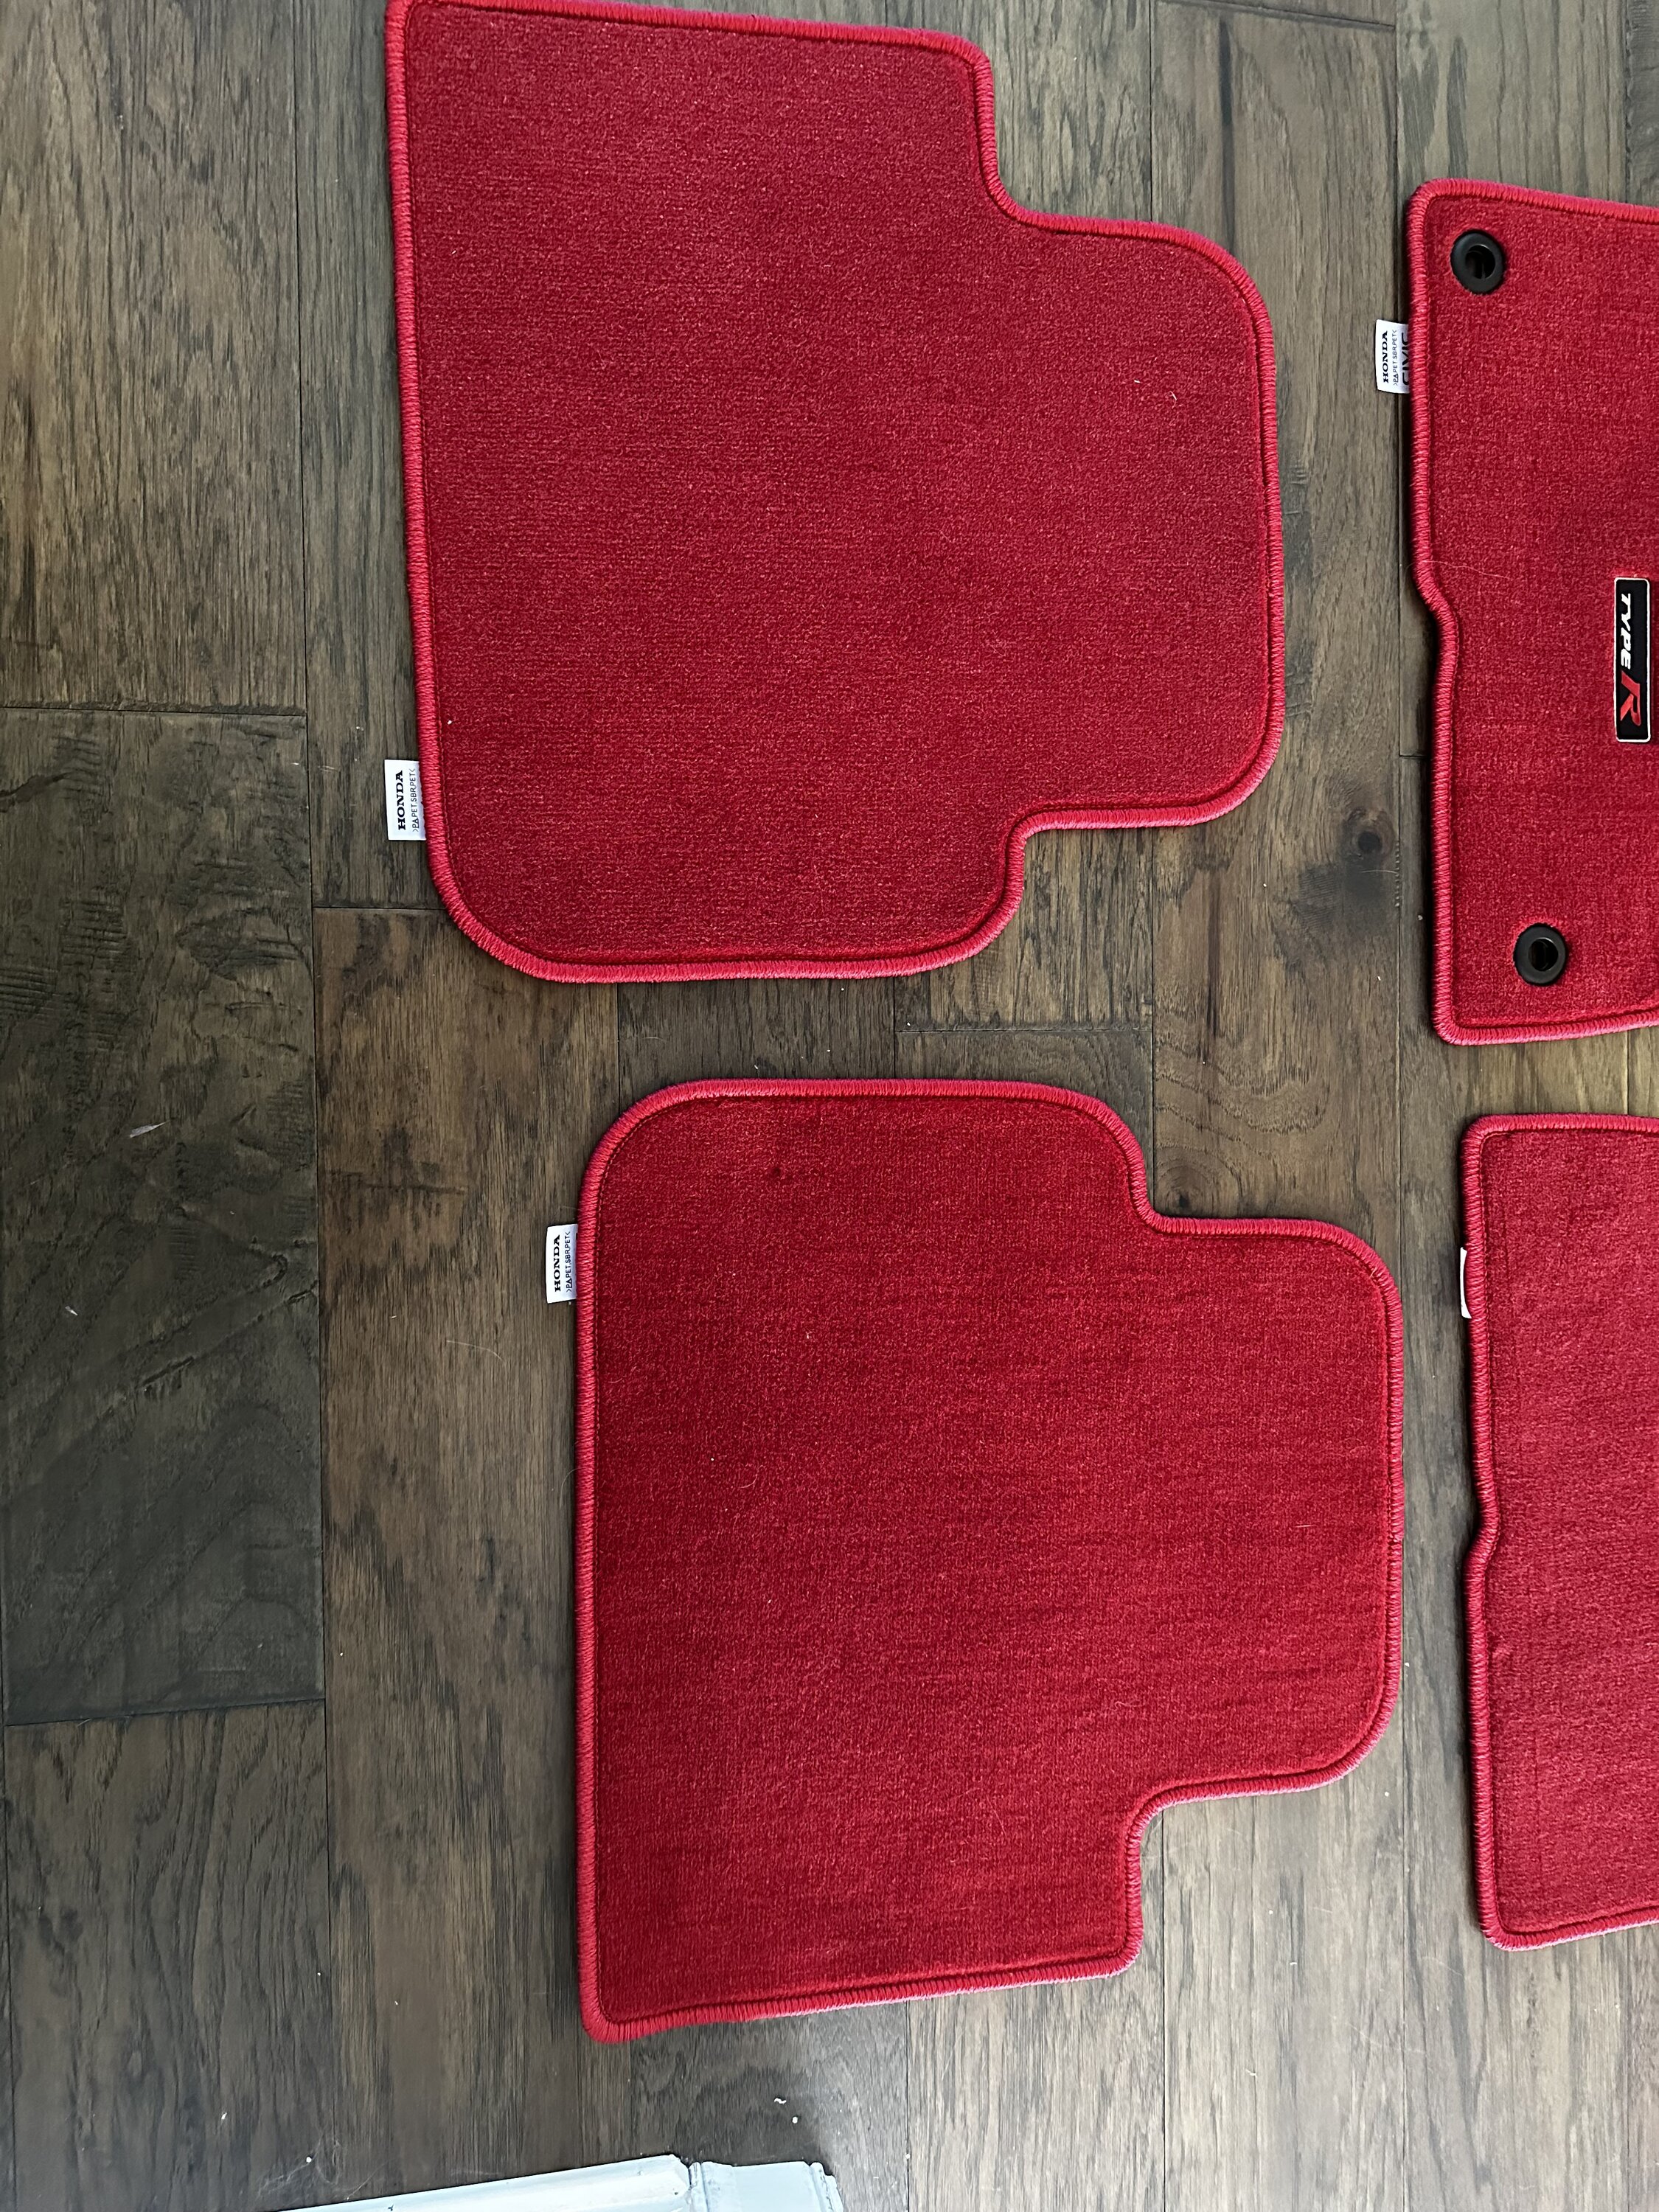 11th Gen Honda Civic FL5 Type R Red OEM floor mats.  Used < 500 mi IMG_1583